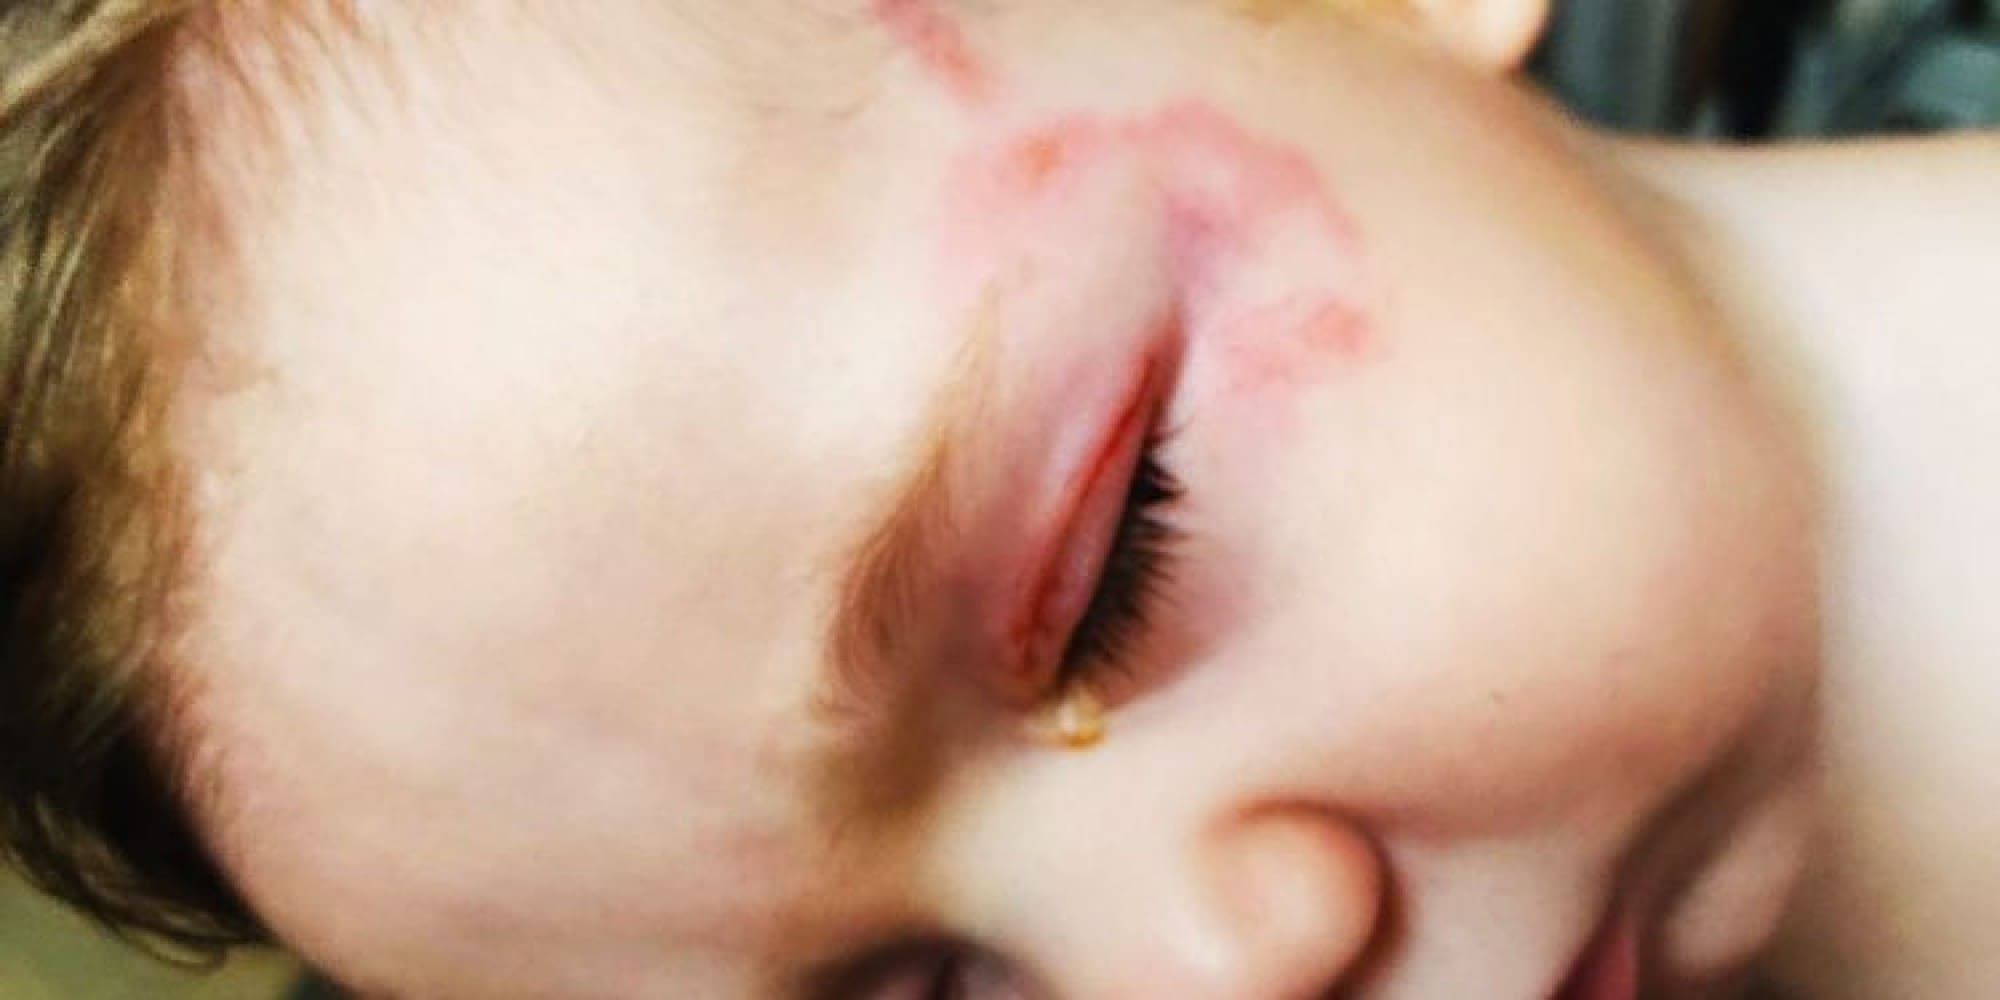 vrefos kriti 5 9 2022 1 - Κρήτη: Συγκλονίζει η μητέρα του 8 μηνών βρέφους που δέχθηκε επίθεση από σκύλο: «Δεν ήξερα εάν είχε μάτι» - Τι λέει η ιδιοκτήτρια (εικόνες & βίντεο)